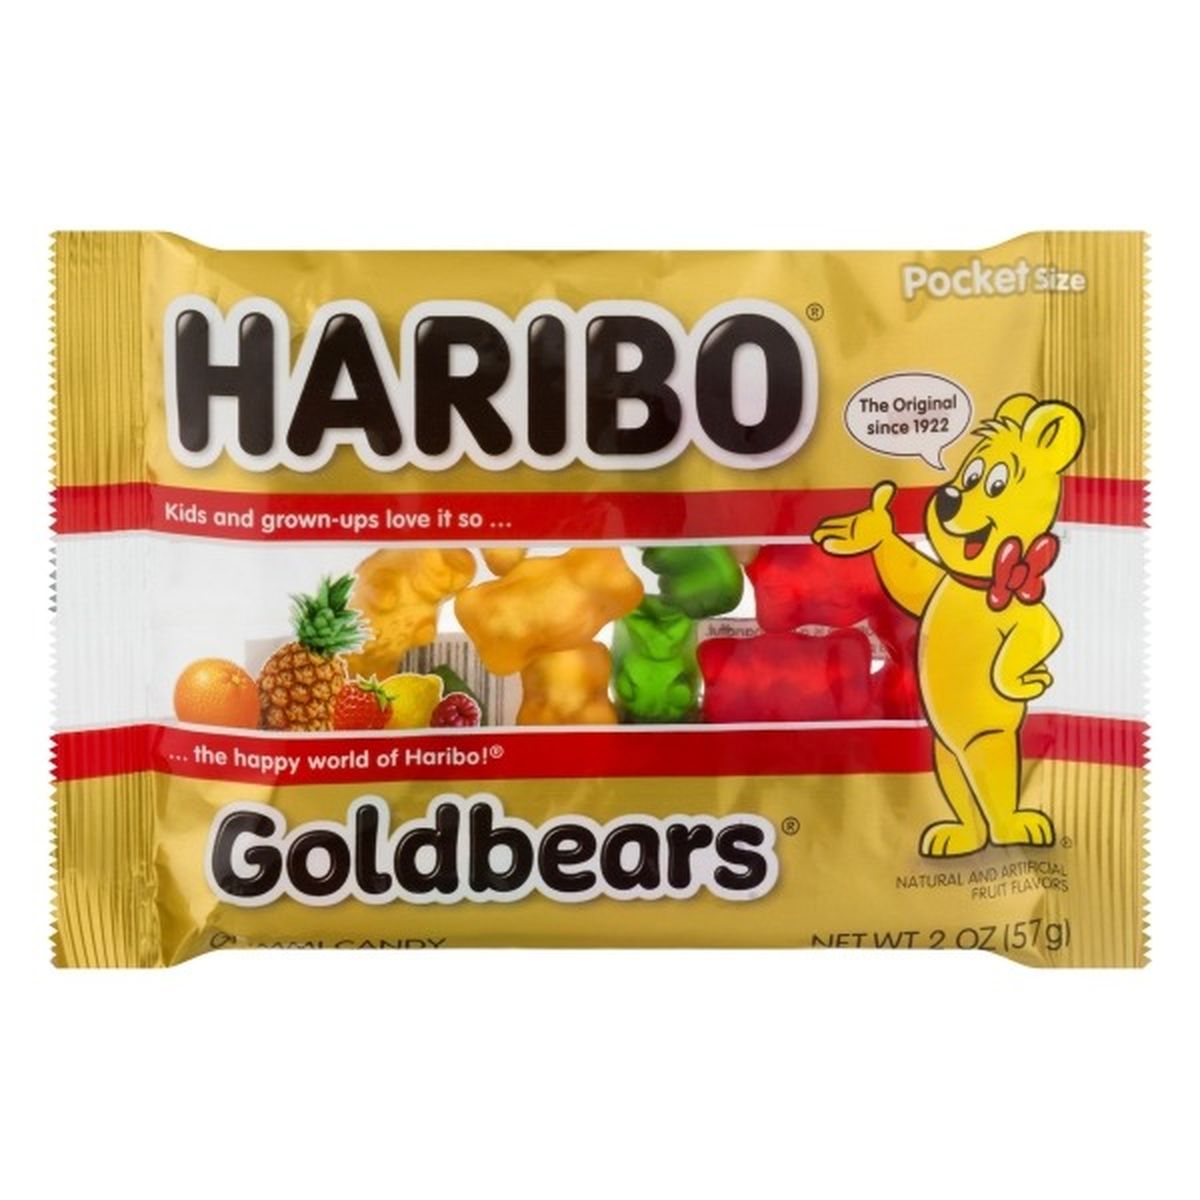 Calories in HARIBO Gummi Candy, Goldbears, Pocket Size